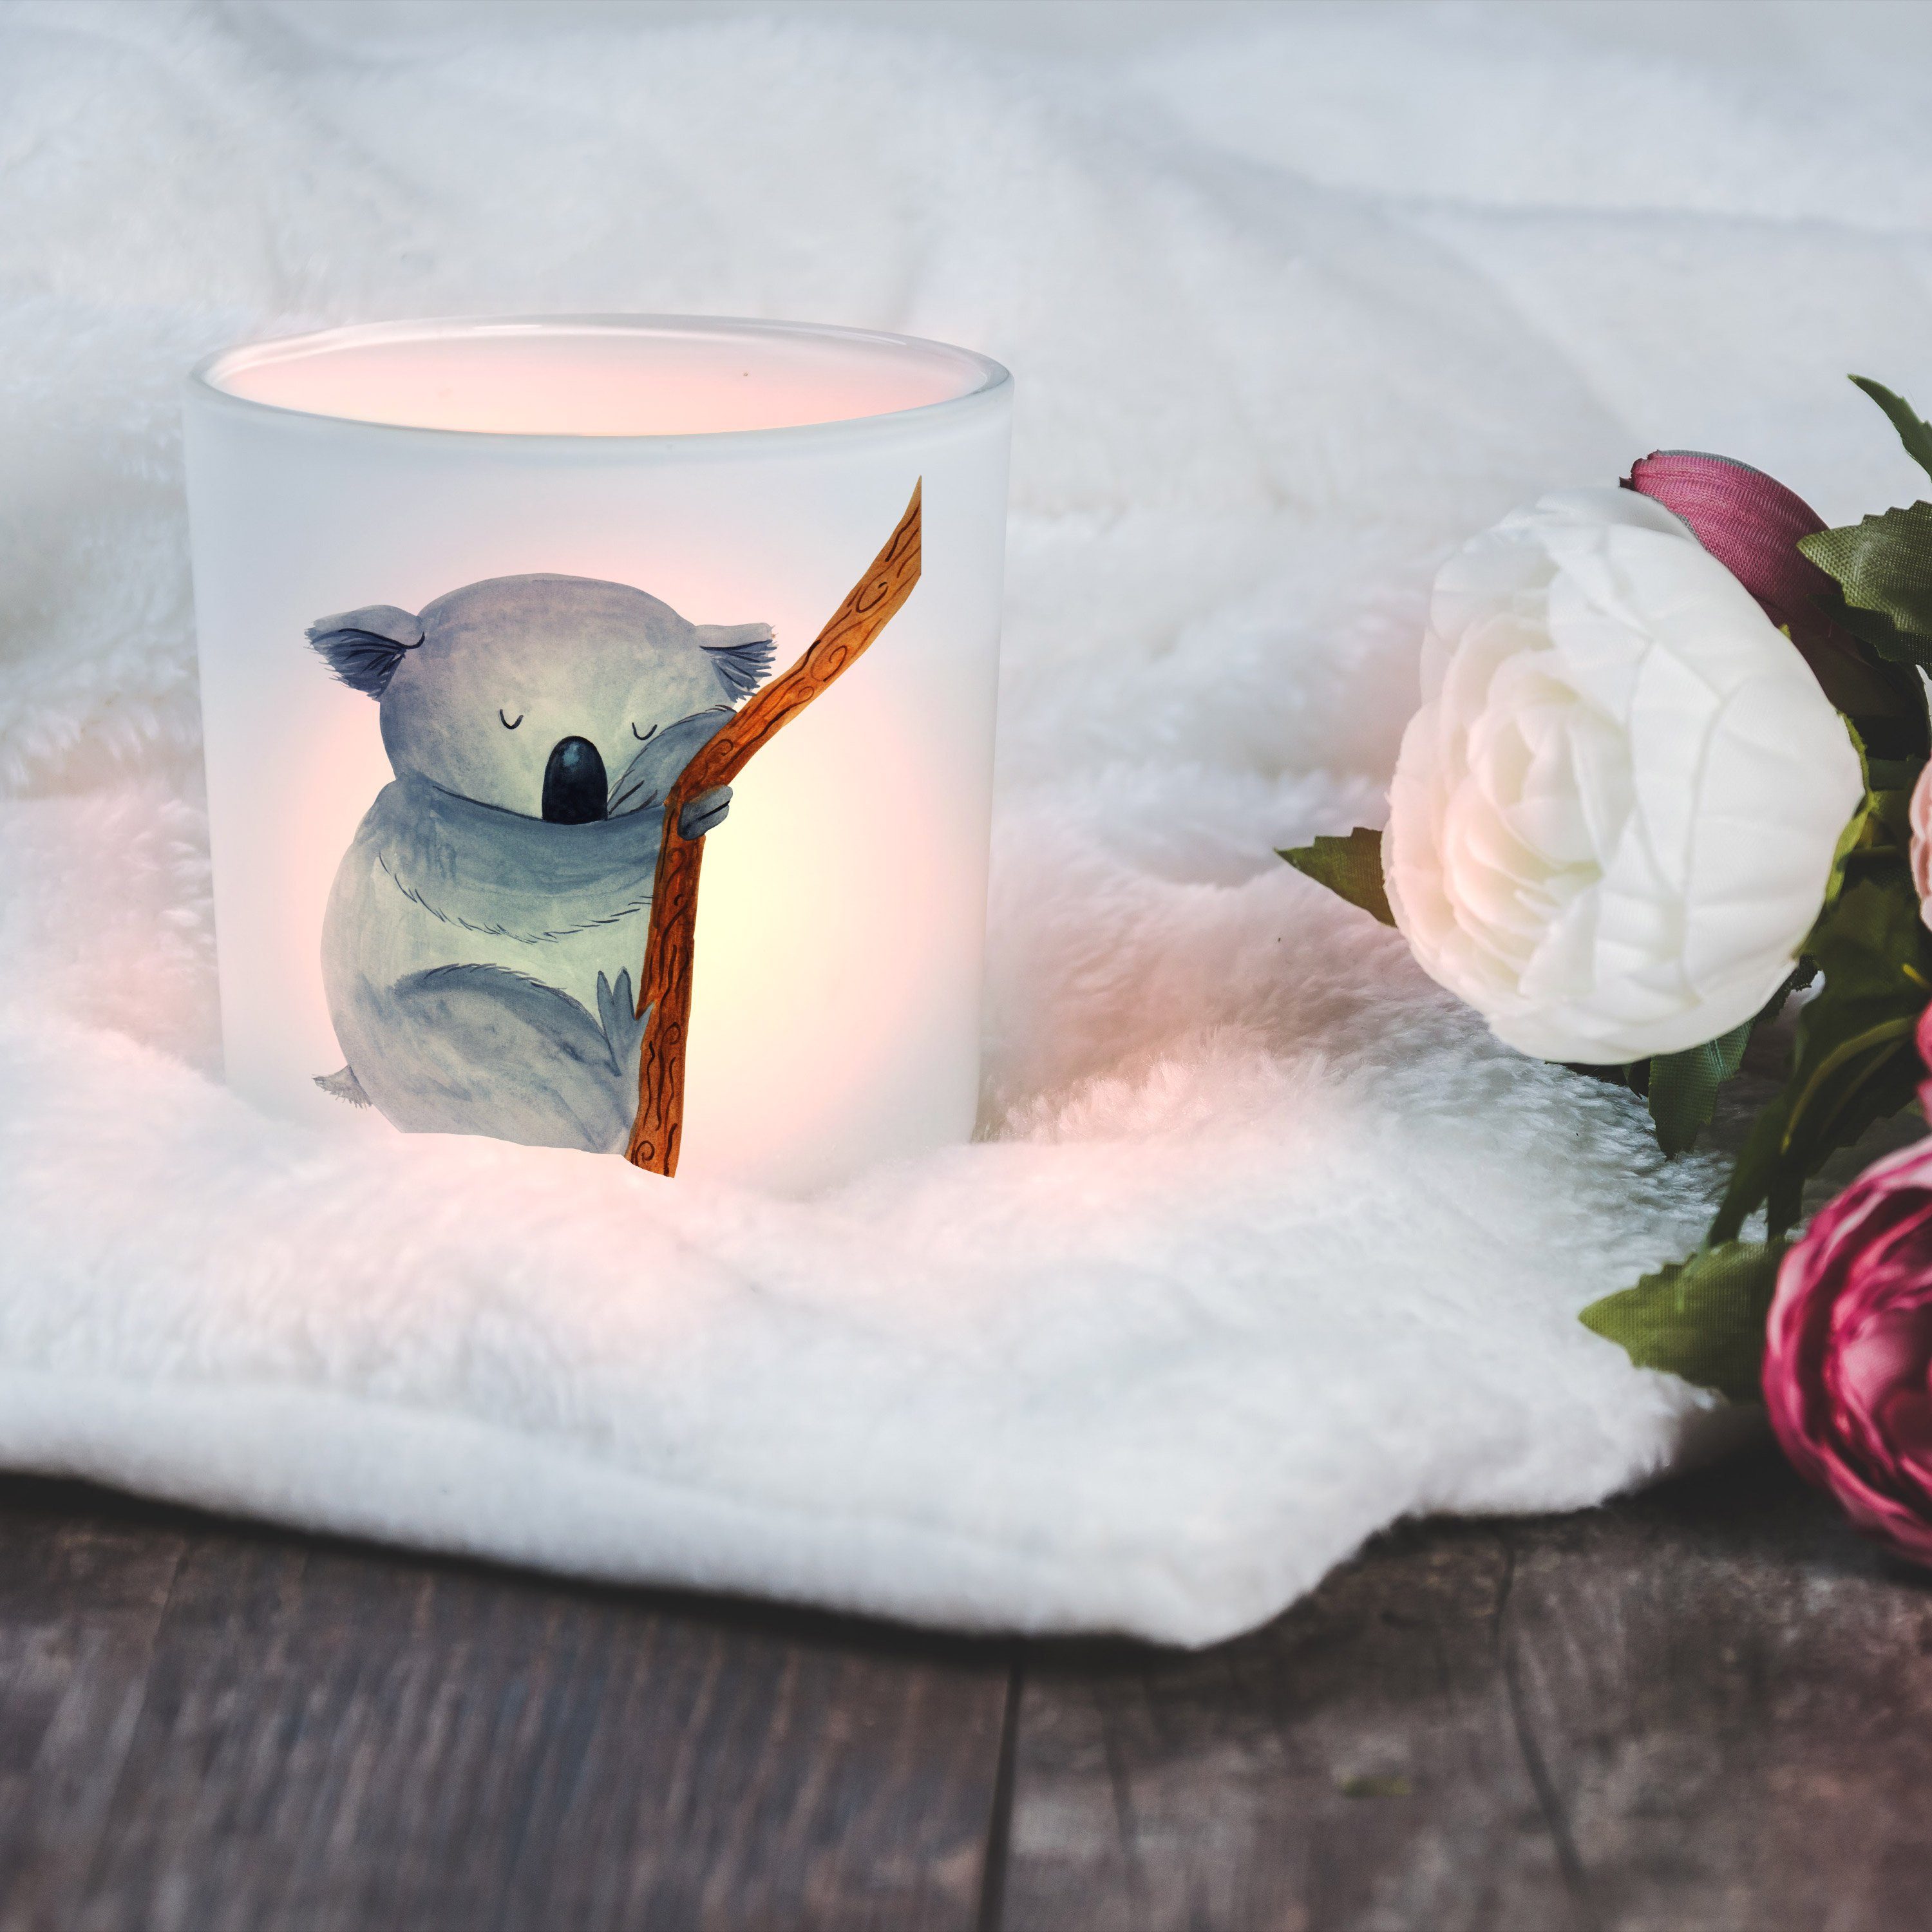 Mr. & Mrs. Panda Windlicht Kerzenglas, Geschenk, - Windlicht Transparent Tierm - Kerze, Koalabär St) (1